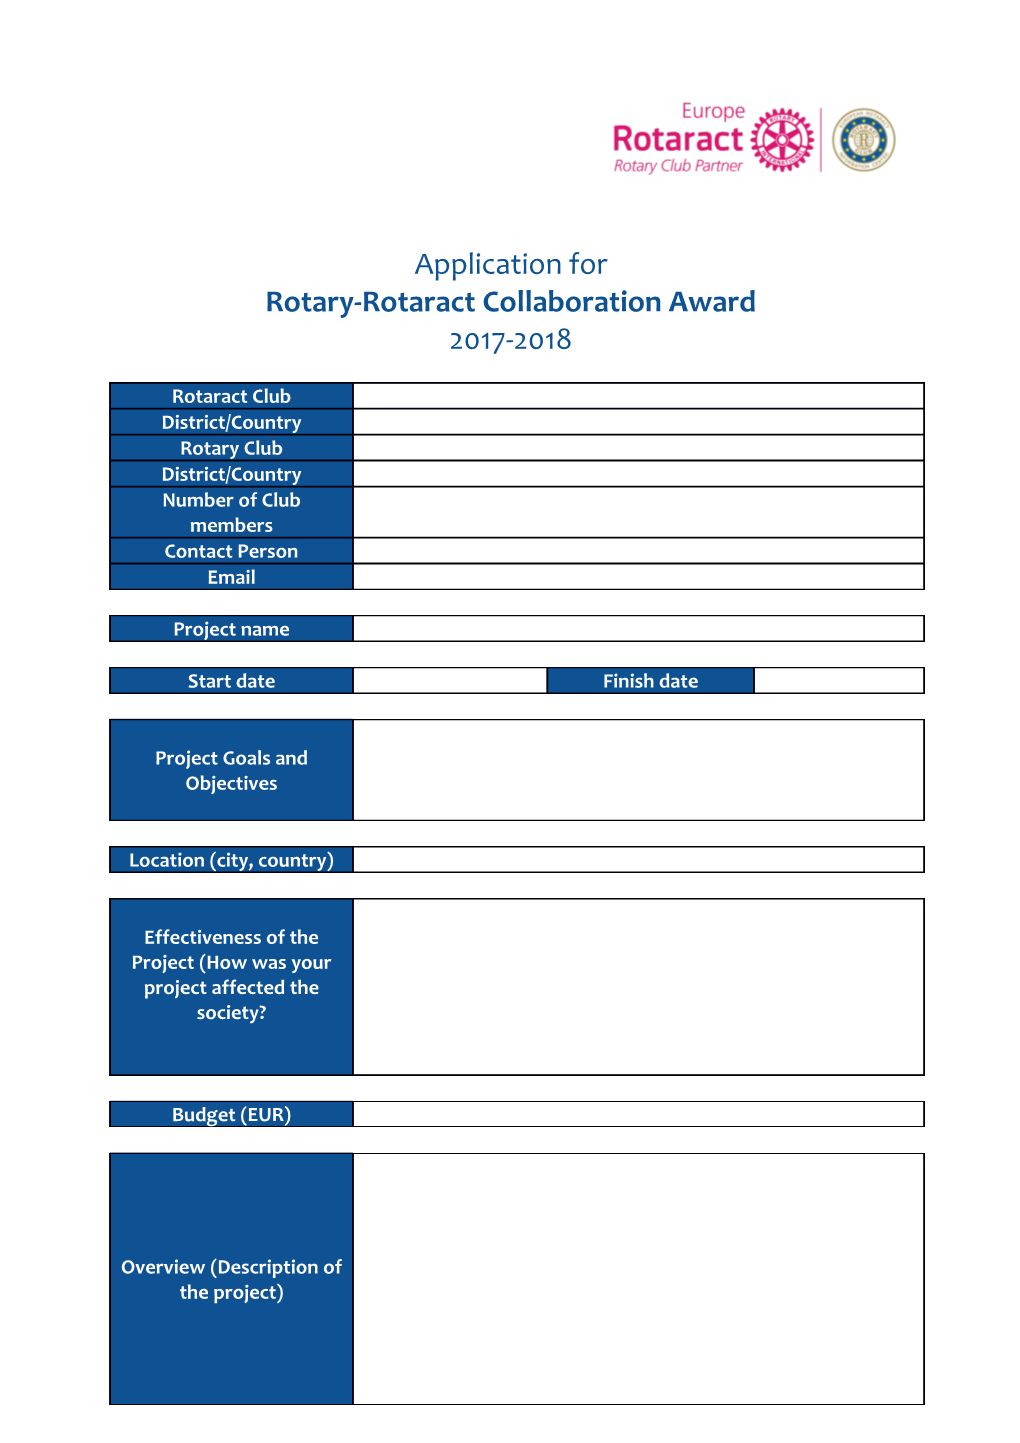 Rotary-Rotaract Collaboration Award